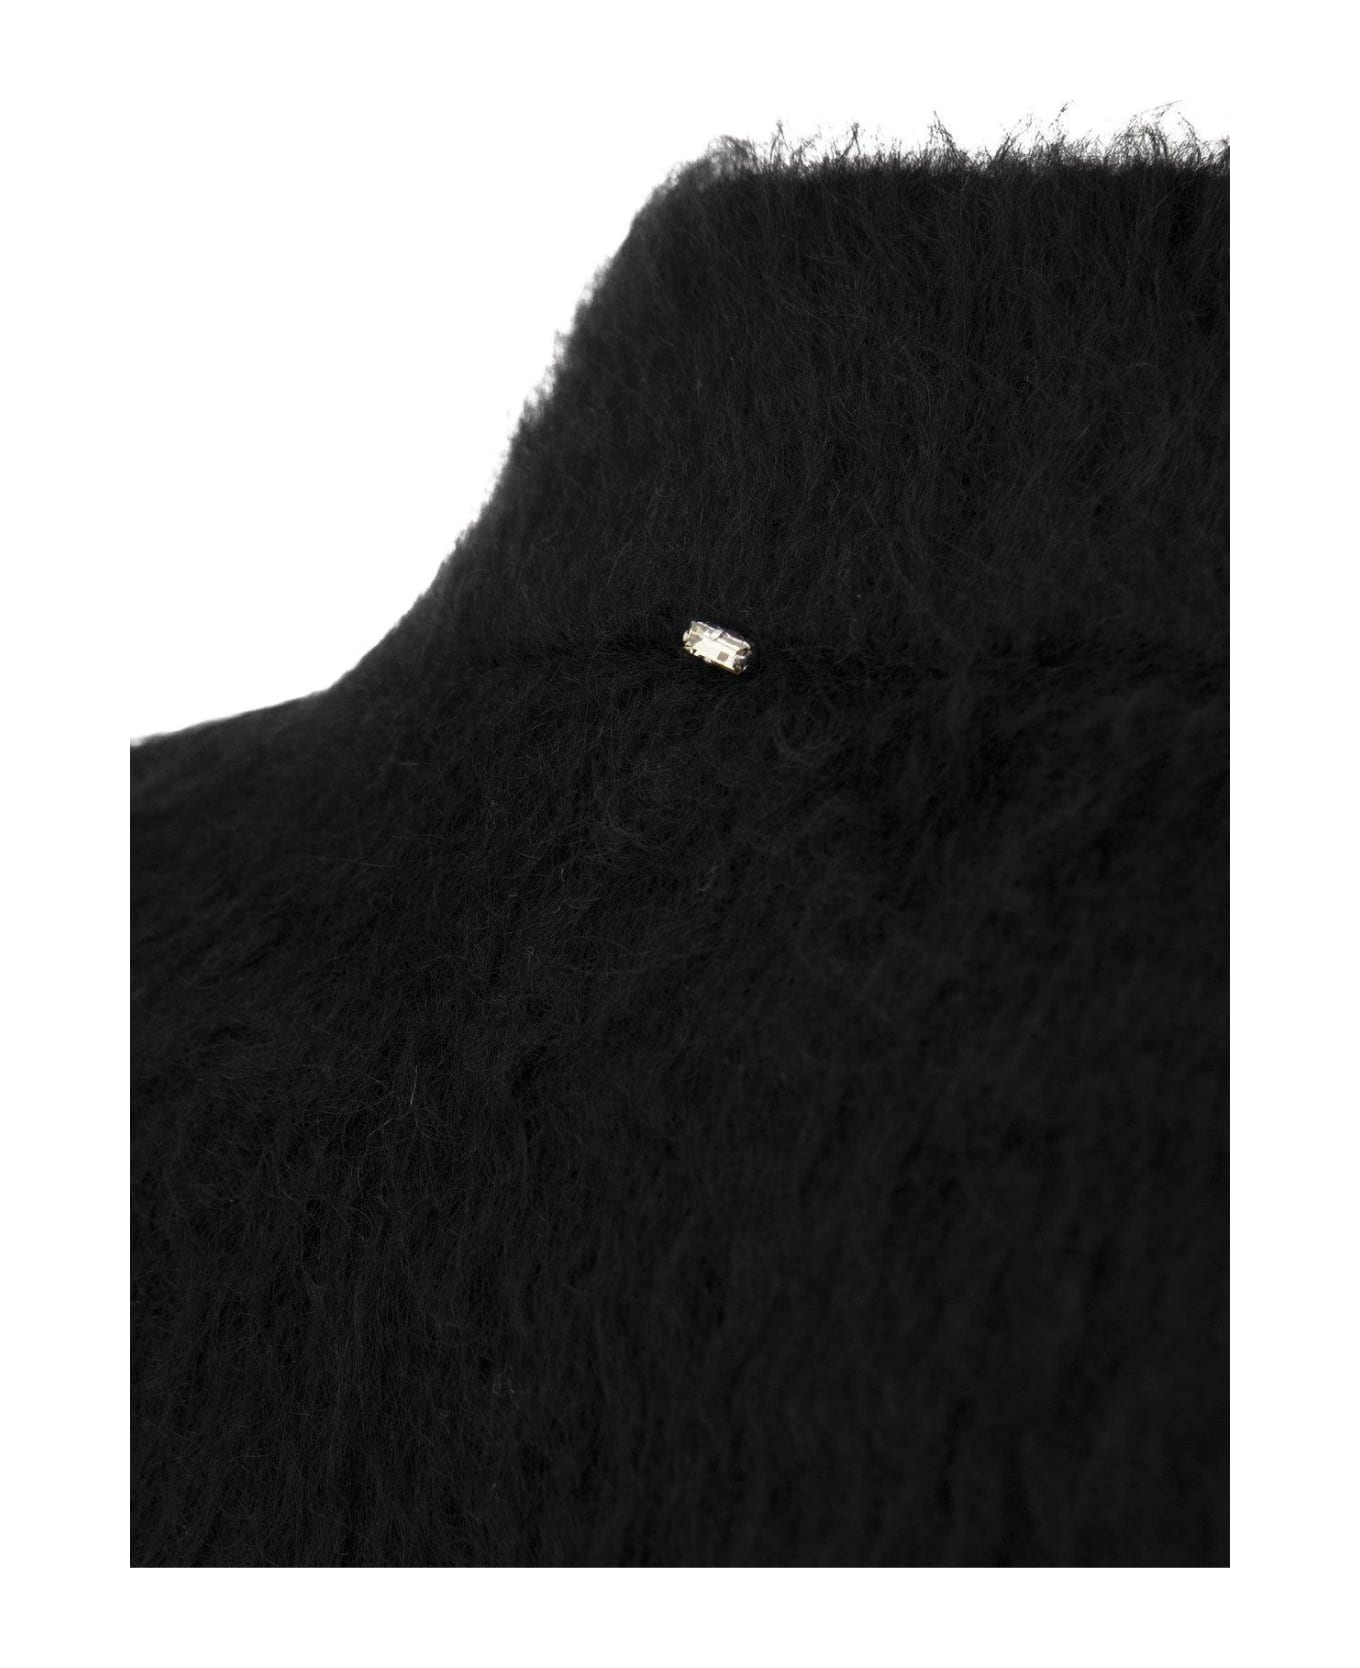 SportMax High-neck Cropped Sweater - BLACK